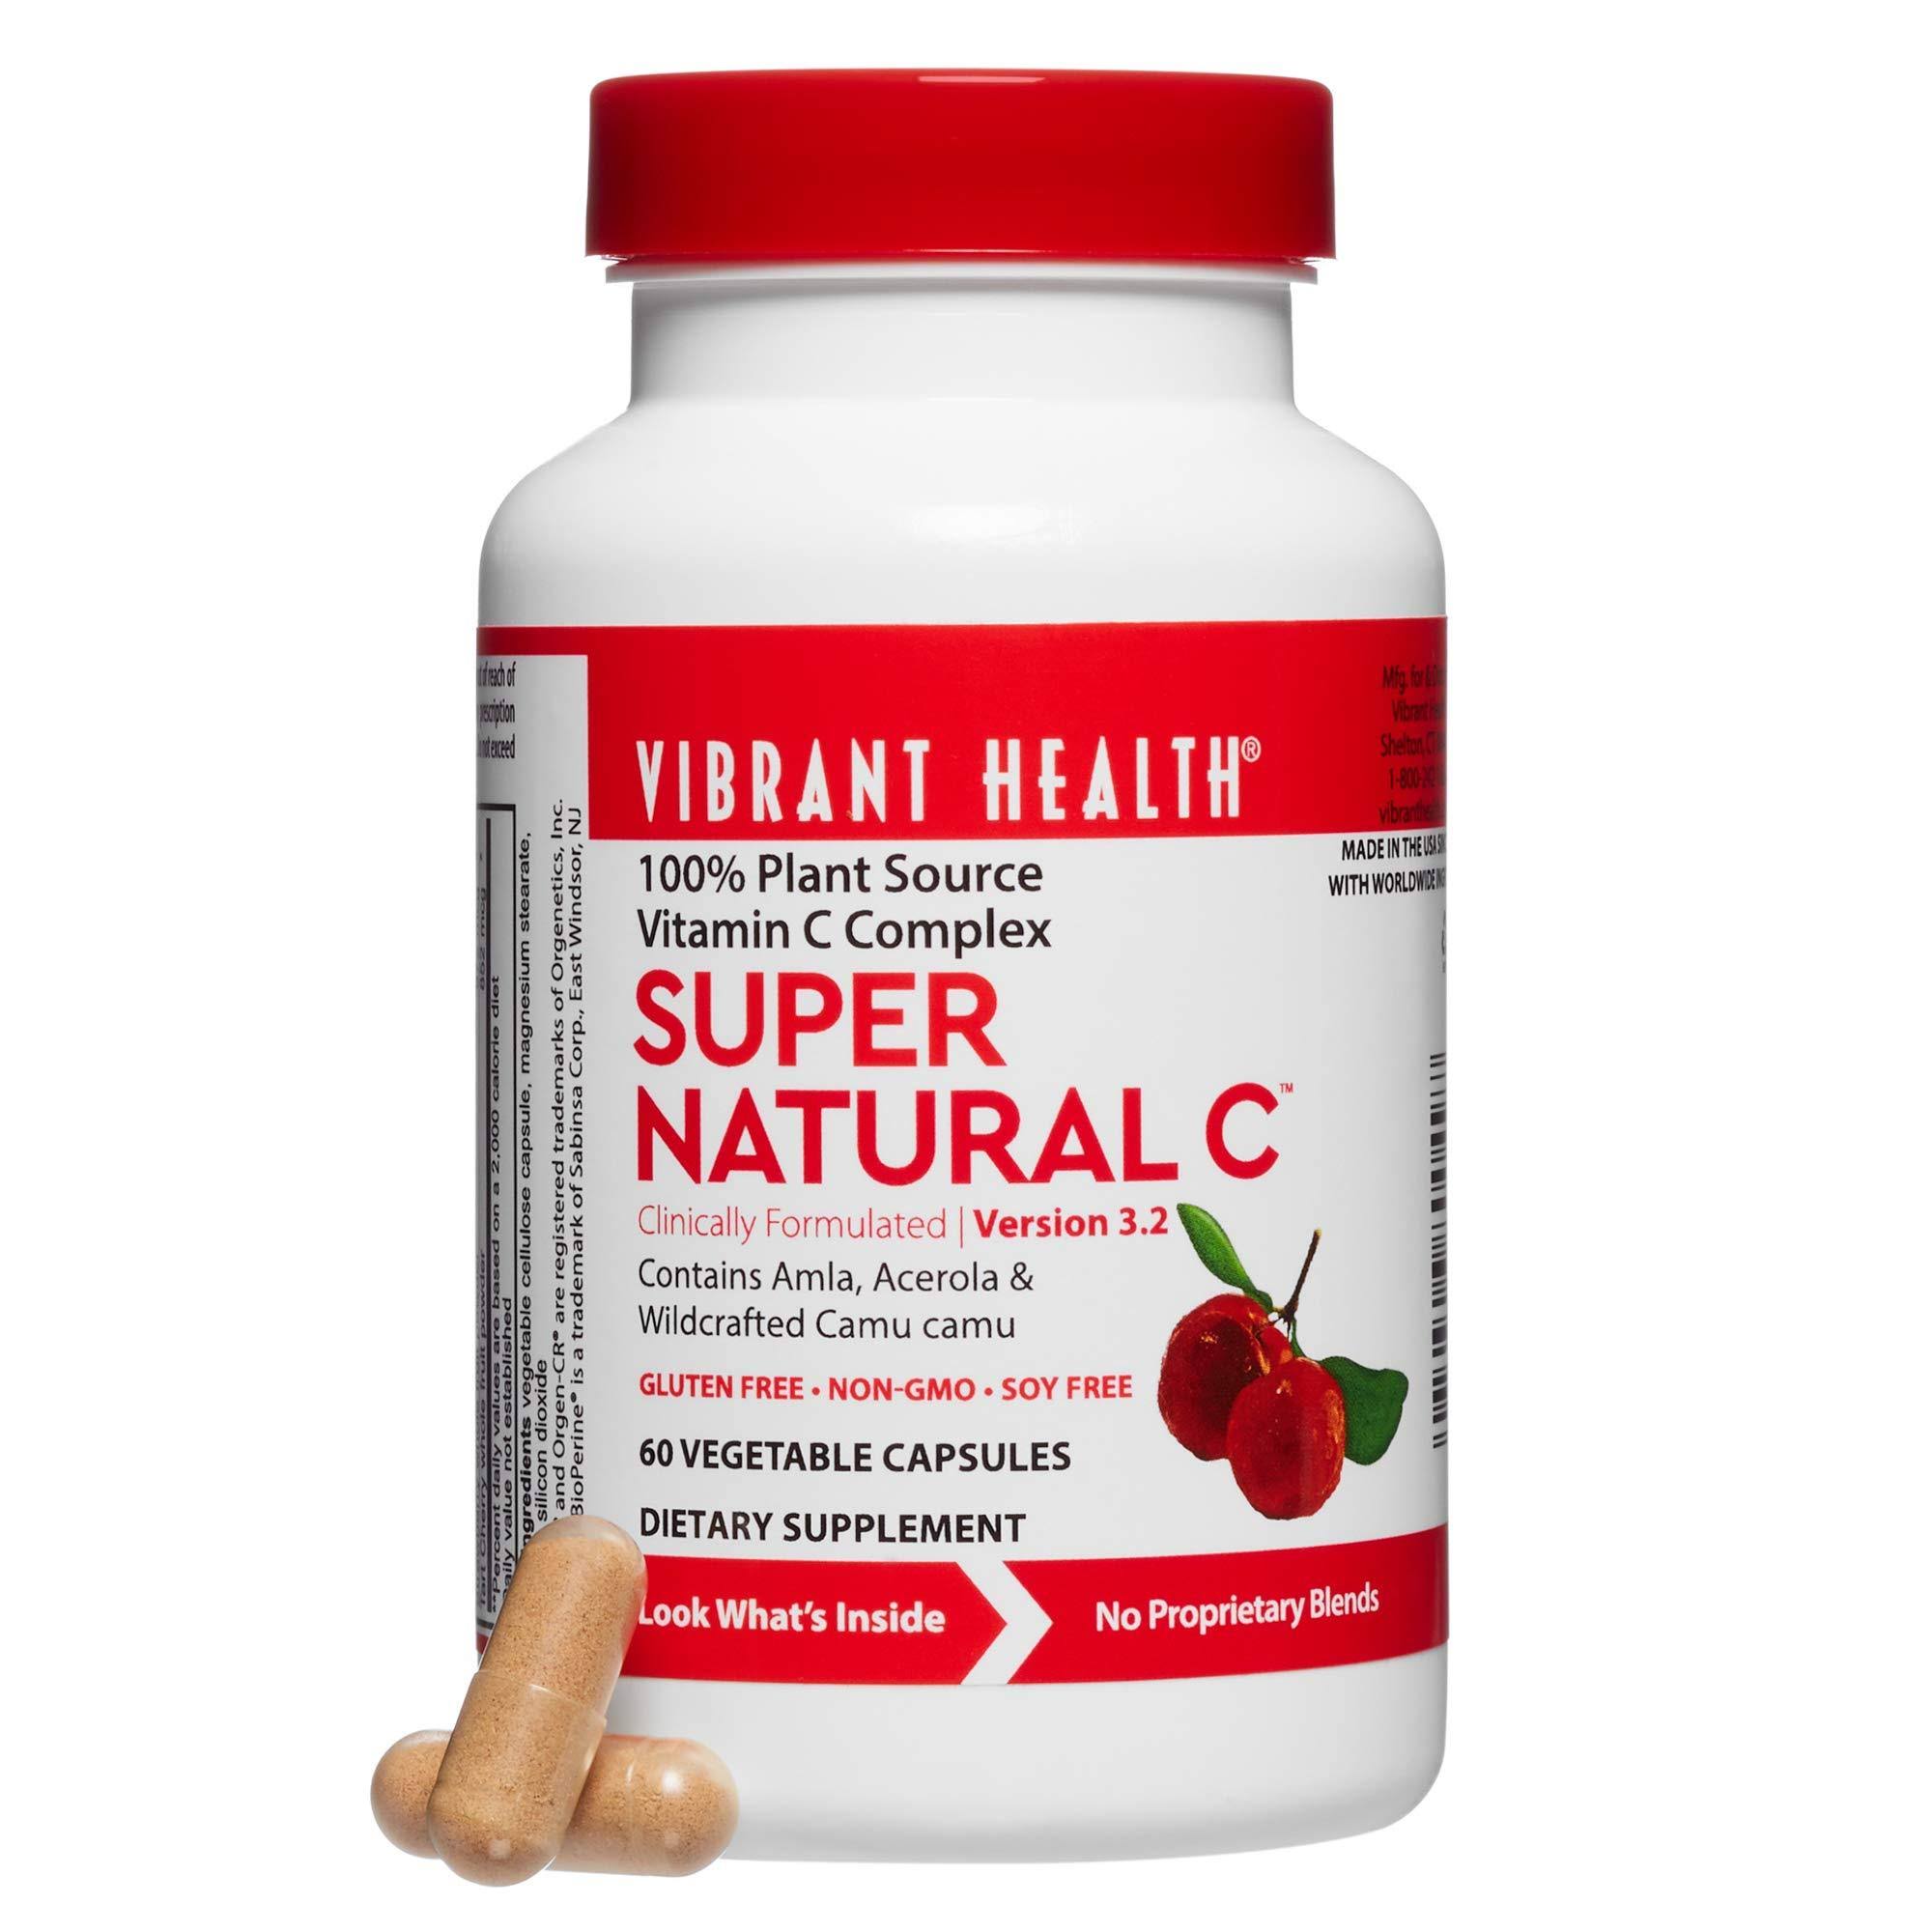 Vibrant Health Super Natural C Supplement - 60 Vegetable Capsules